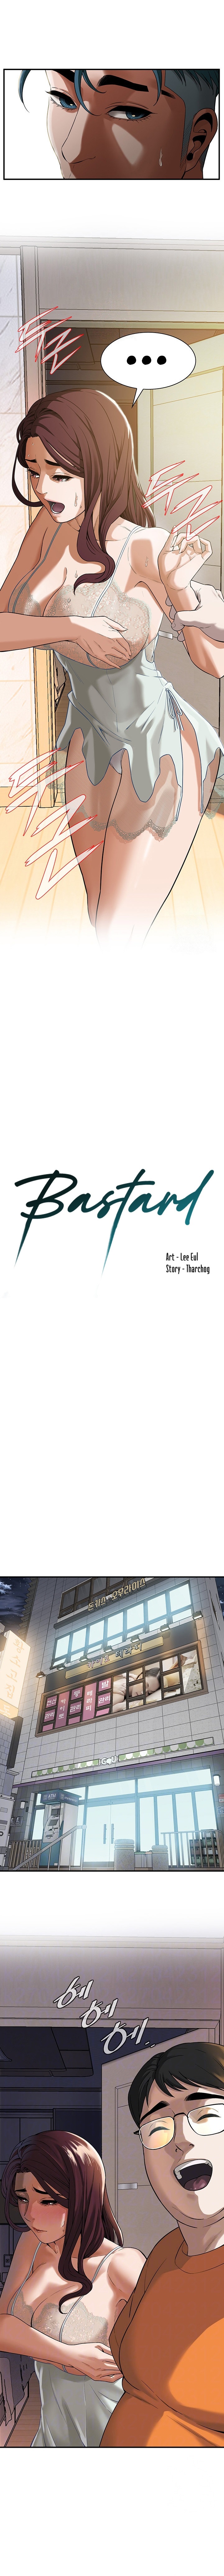 Bastard - Chapter 15 Page 1